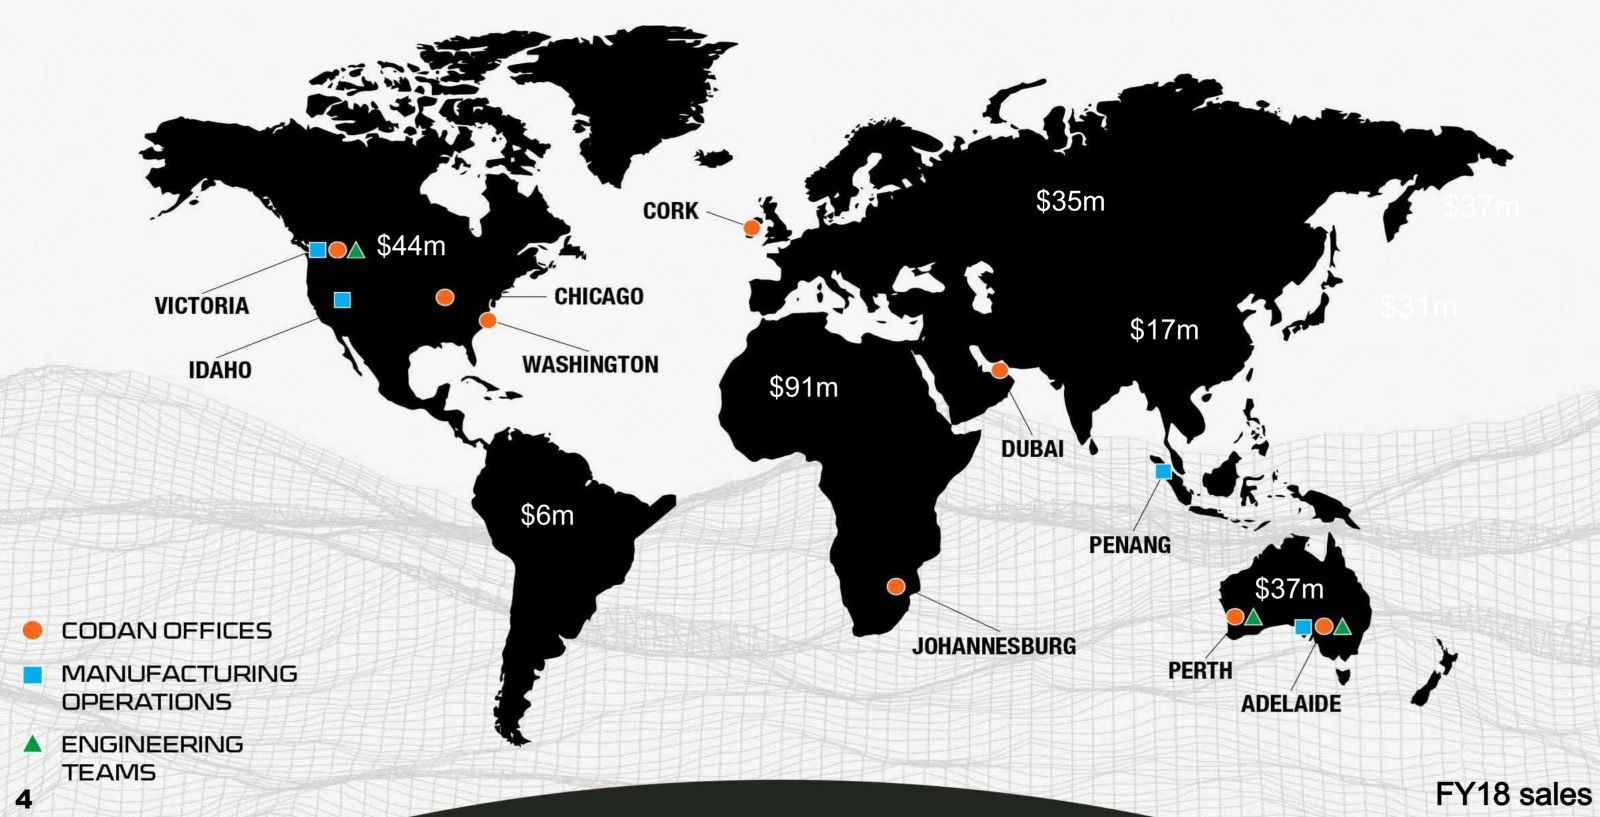 codan-fy18-global-sales-map.jpg